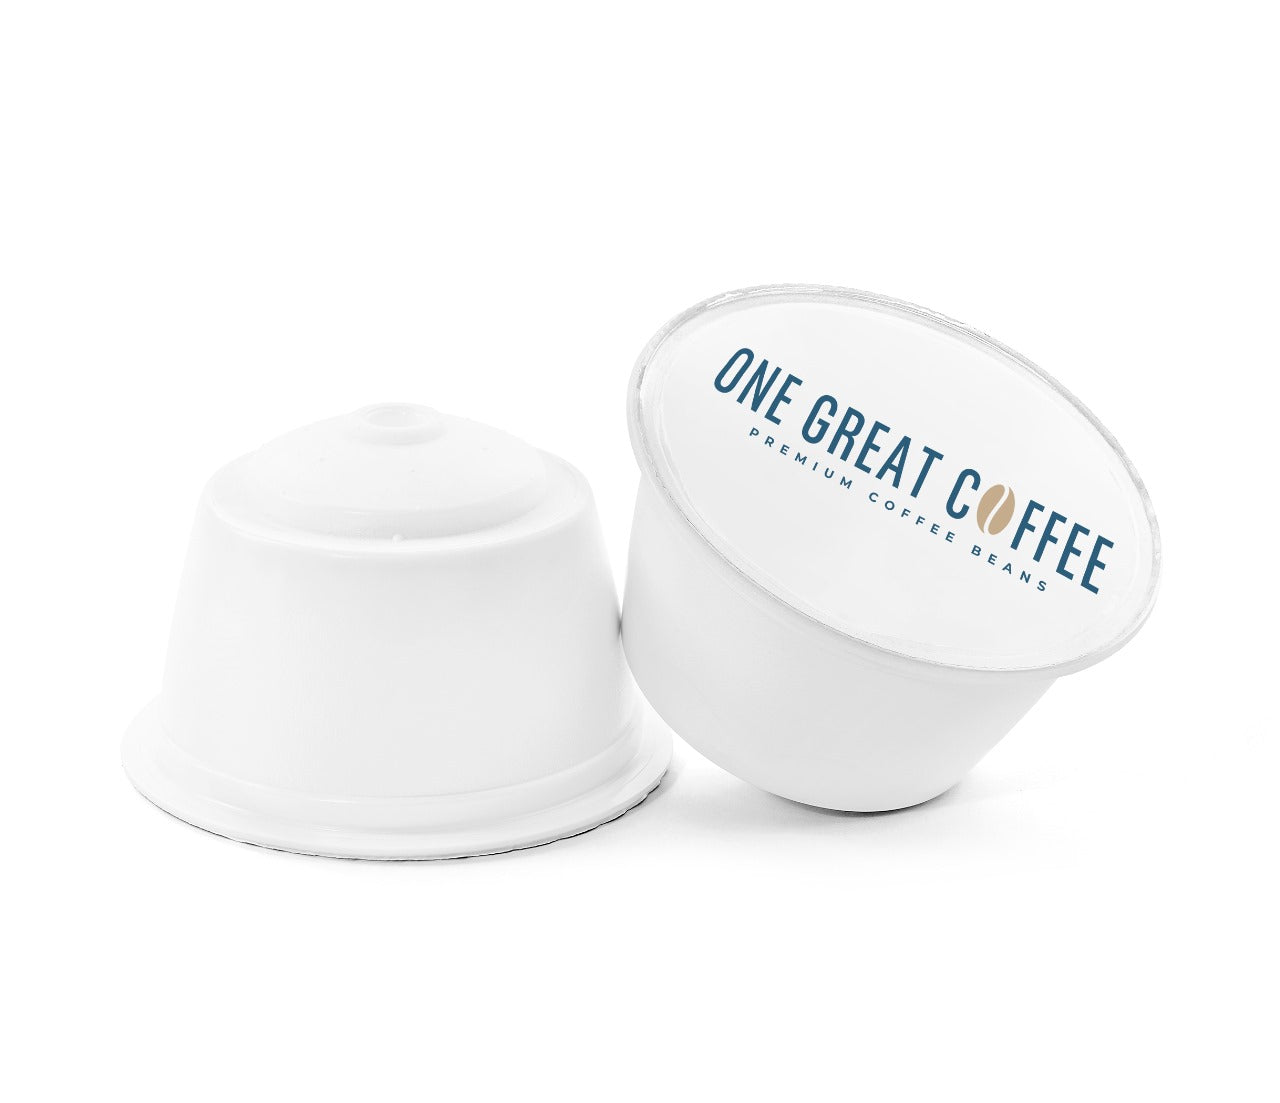 Creme Brulee Flavored Coffee Single Serve